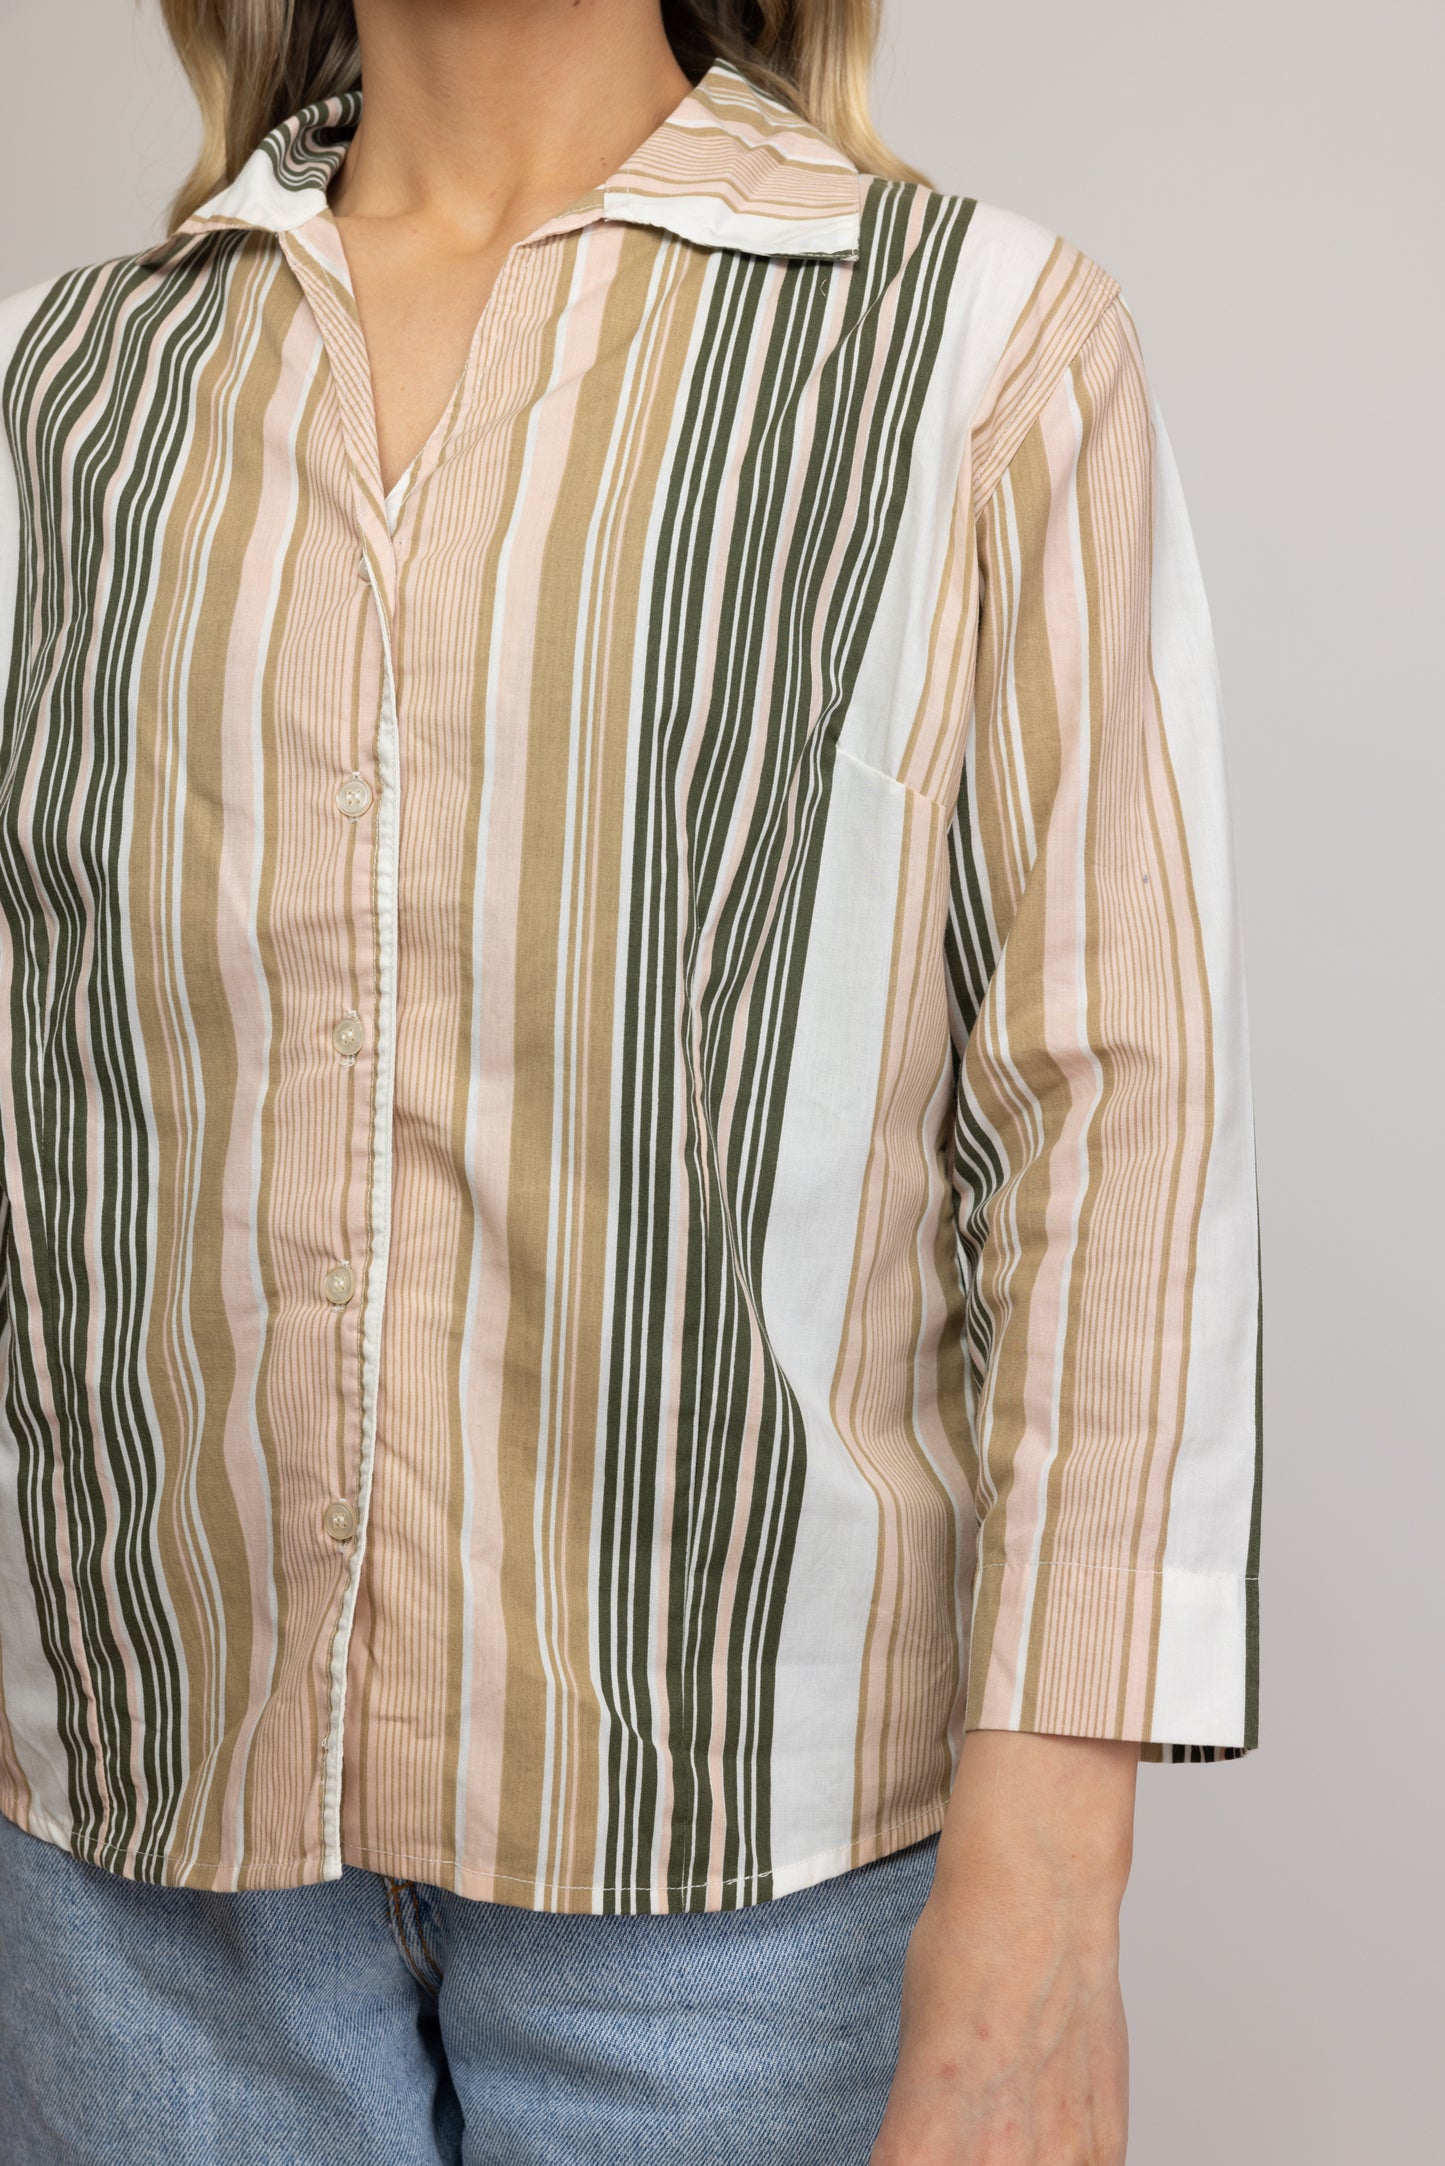 70's Striped Shirt S/M